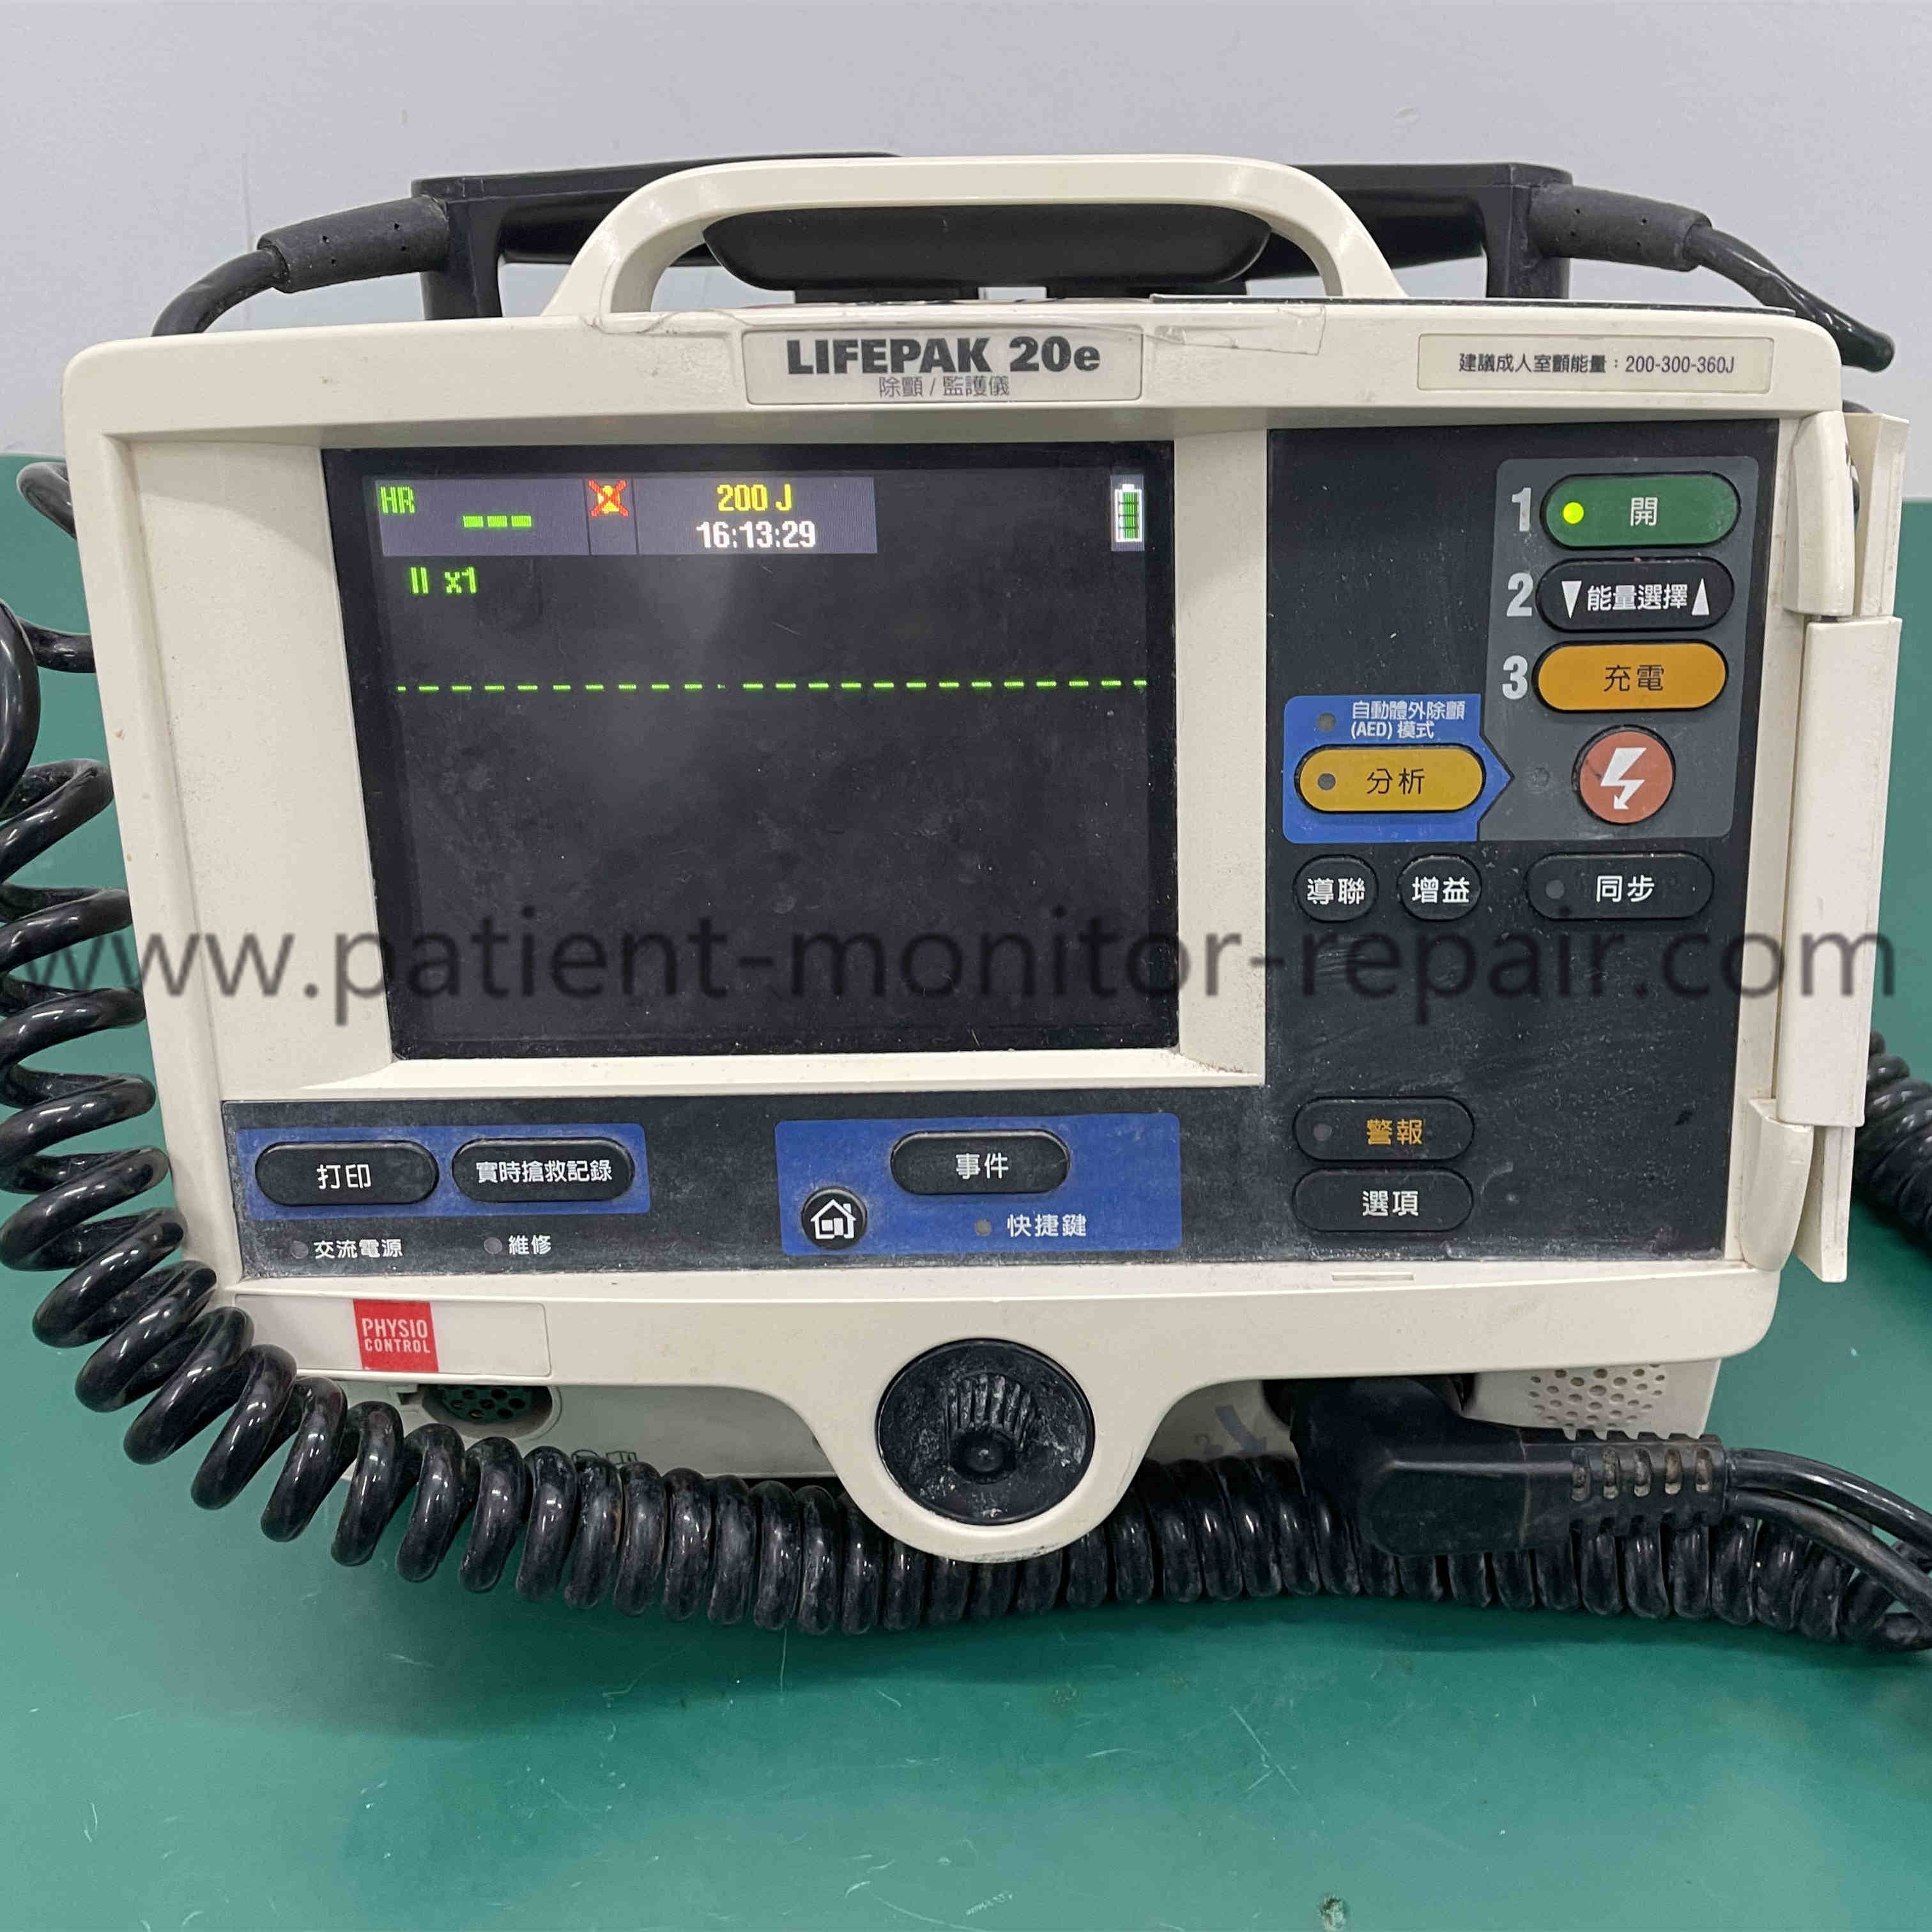 PHYSIO CONTROL LP20e defibrillator REF 99507-000058 3202487-352  (2).jpg